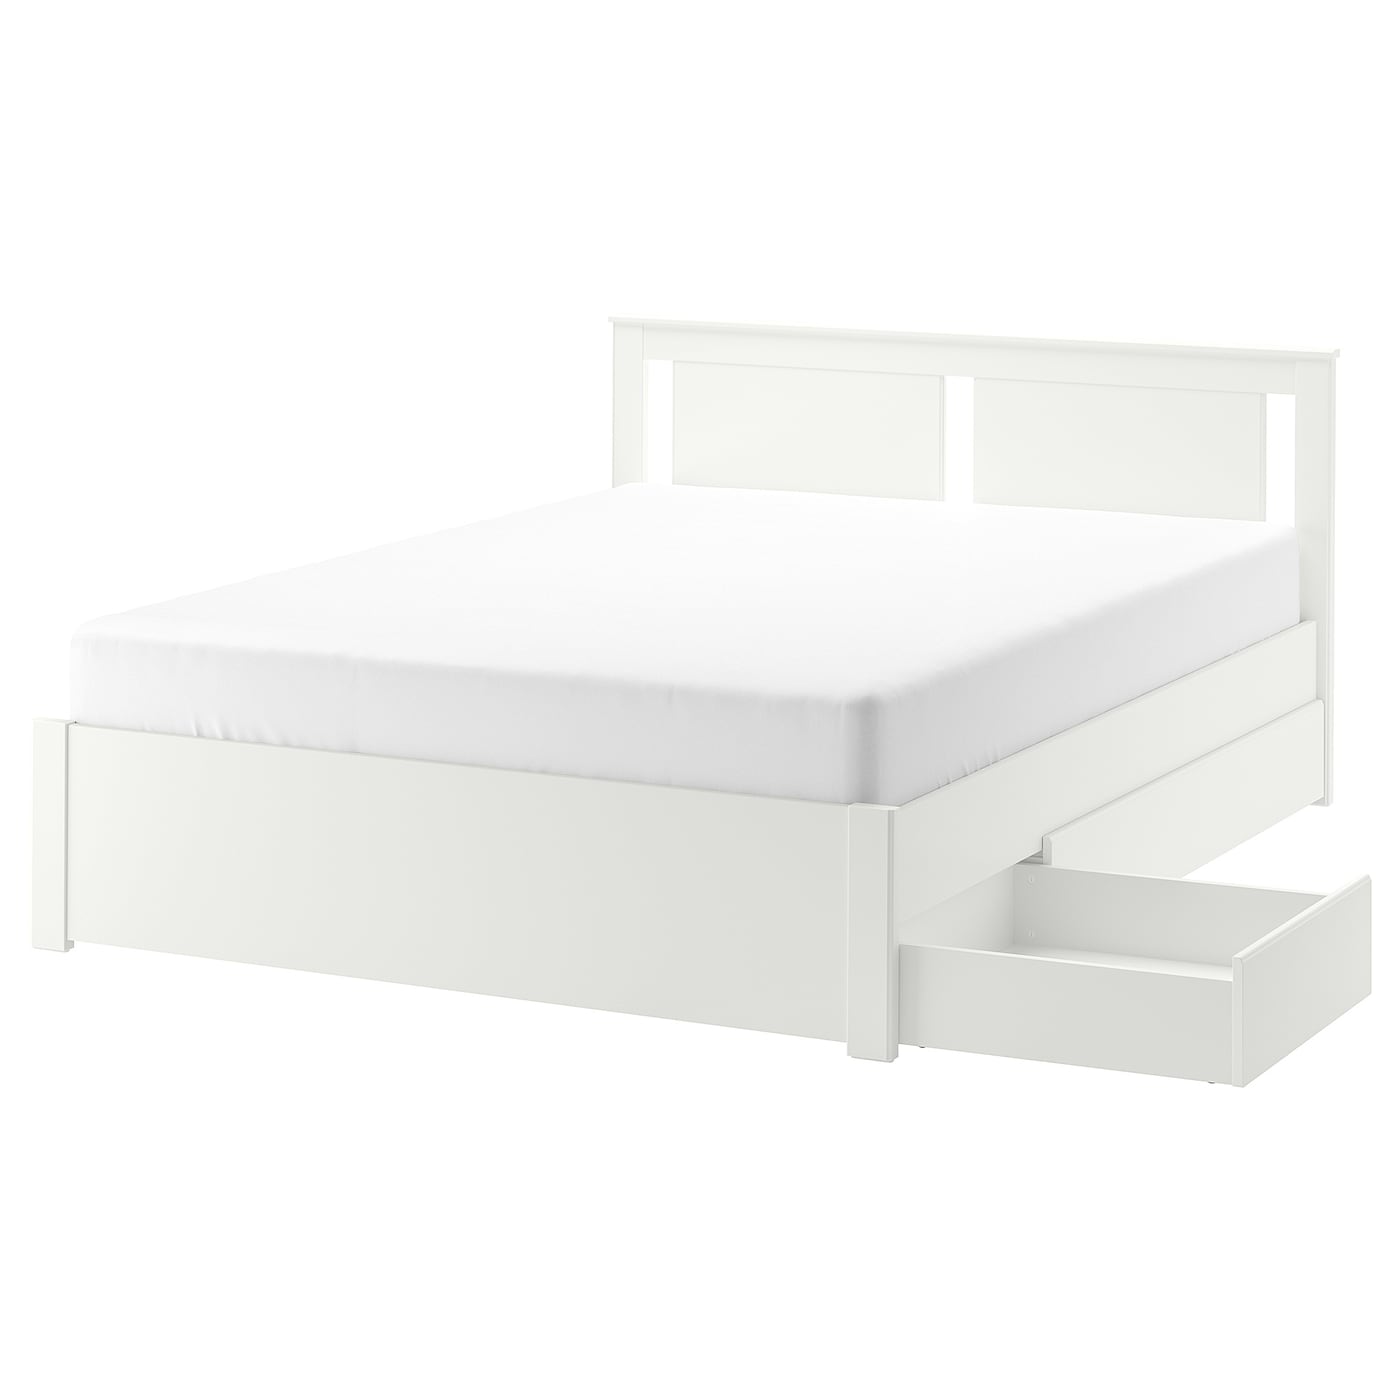 Каркас кровати с 2 ящиками для хранения - IKEA SONGESAND/LÖNSET/LONSET, 200х160 см, белый, СОНГЕСАНД/ЛОНСЕТ ИКЕА